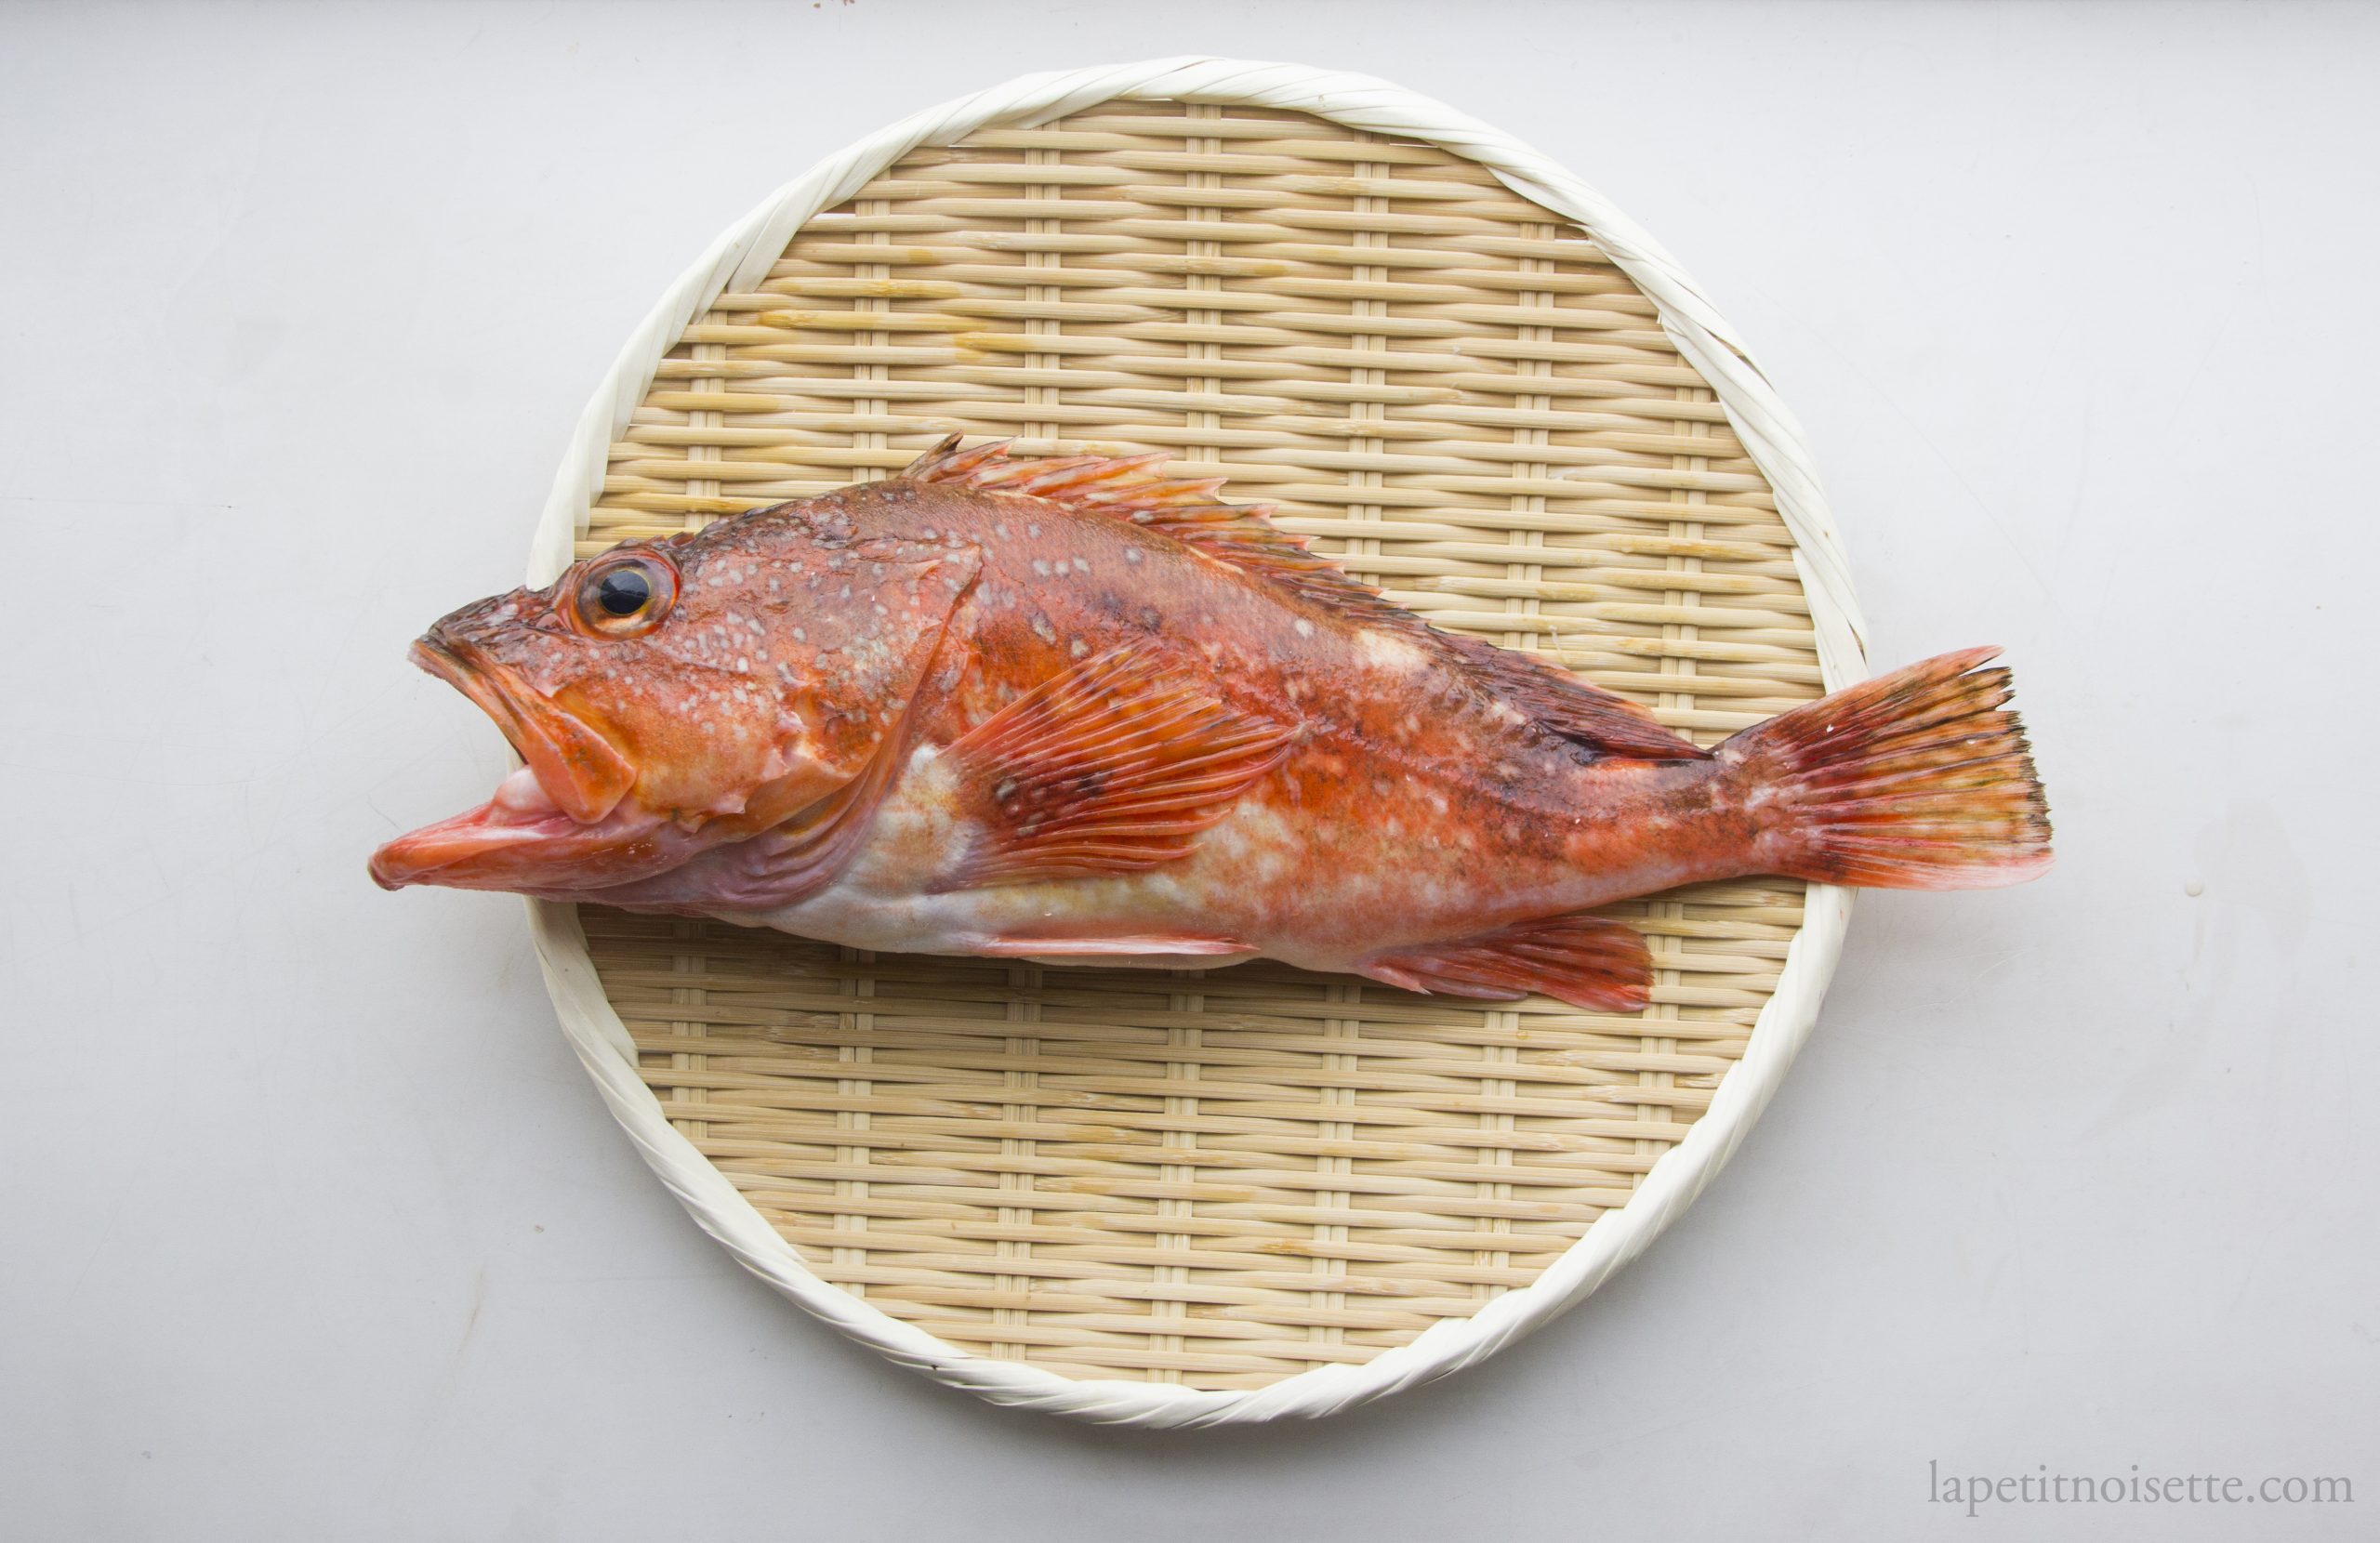 A Japanese Kasago fish for sushi.